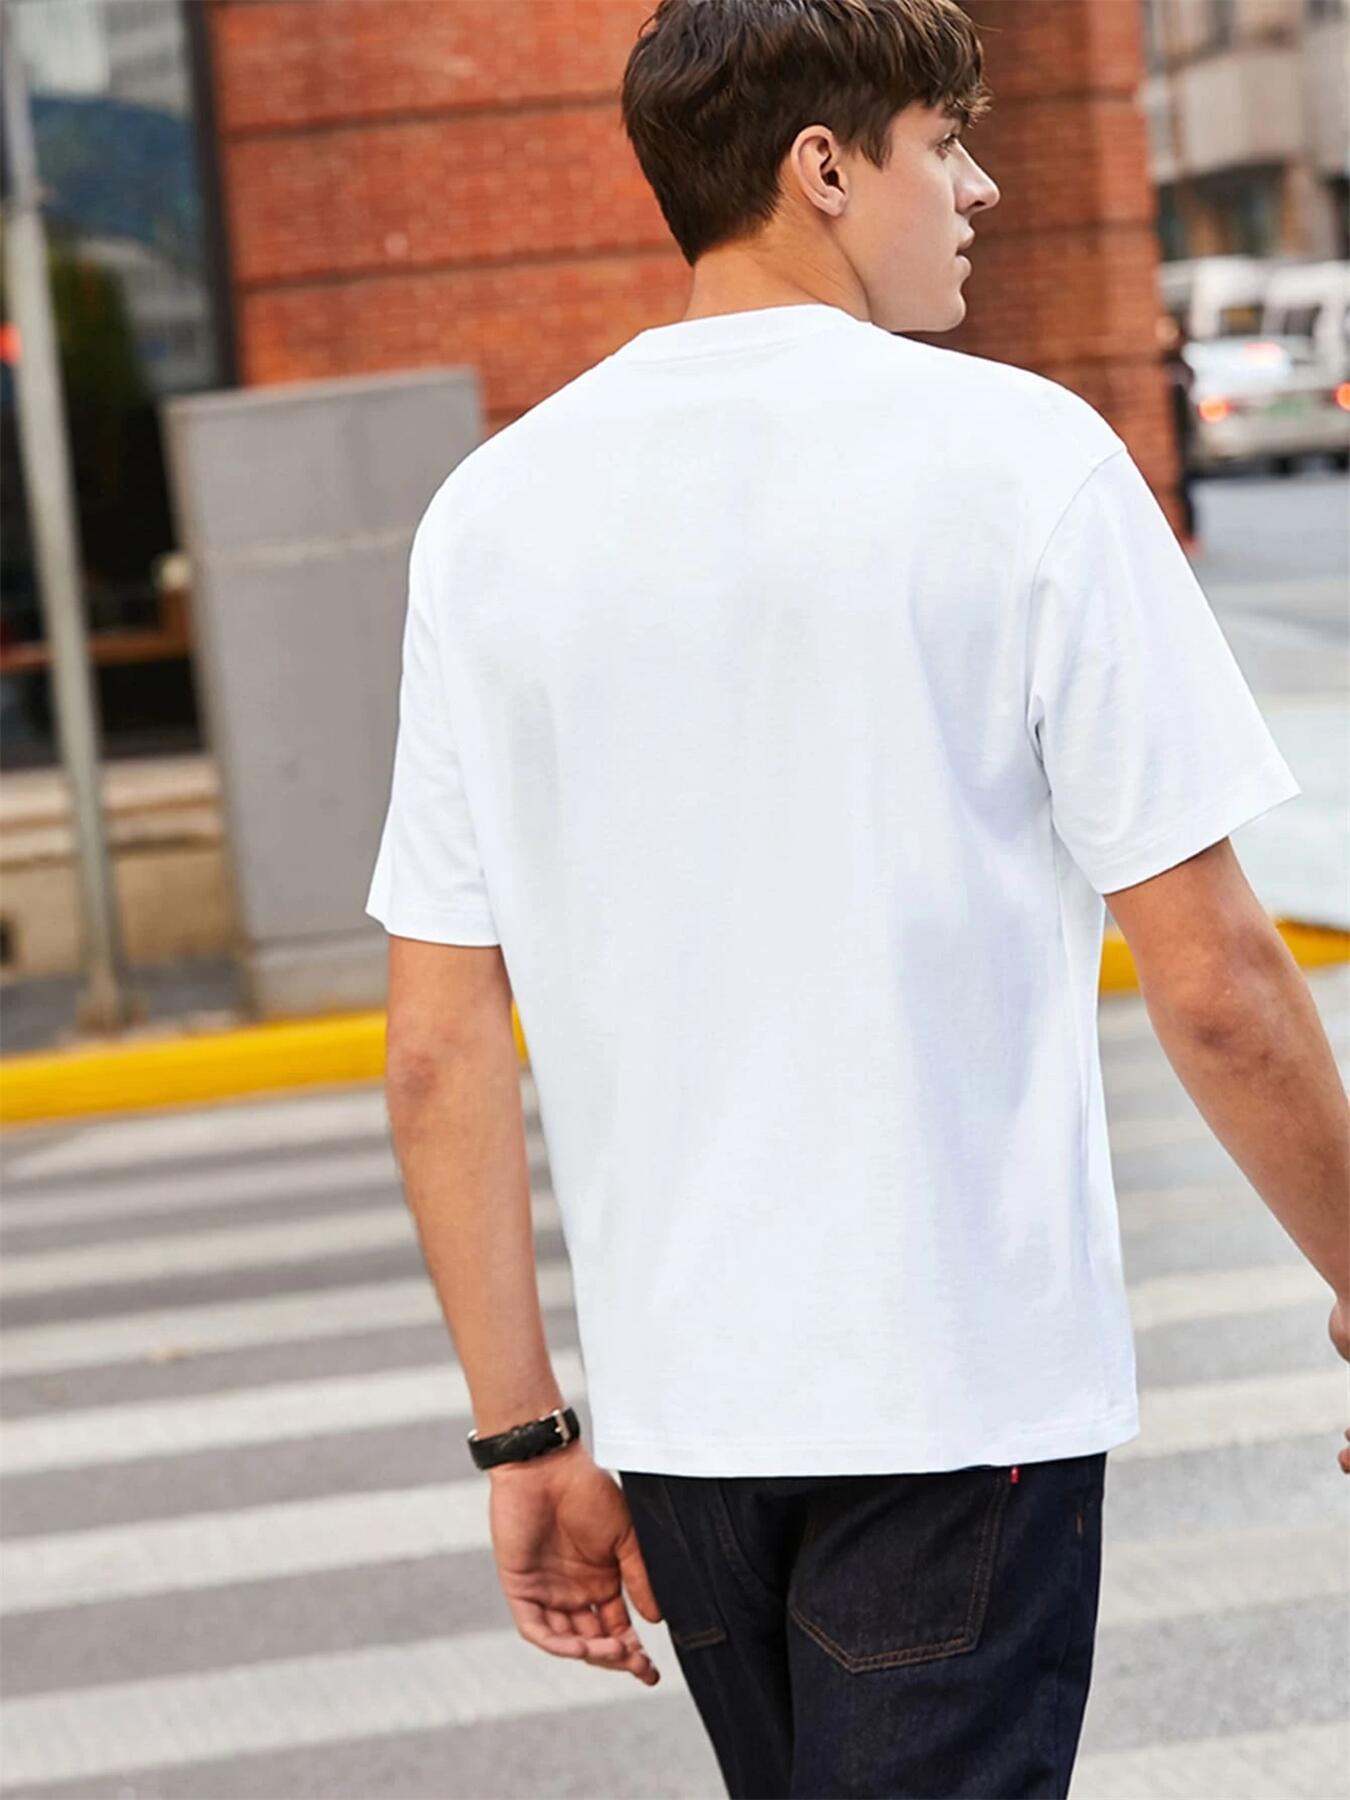 19 Best White T-Shirts for Men 2023